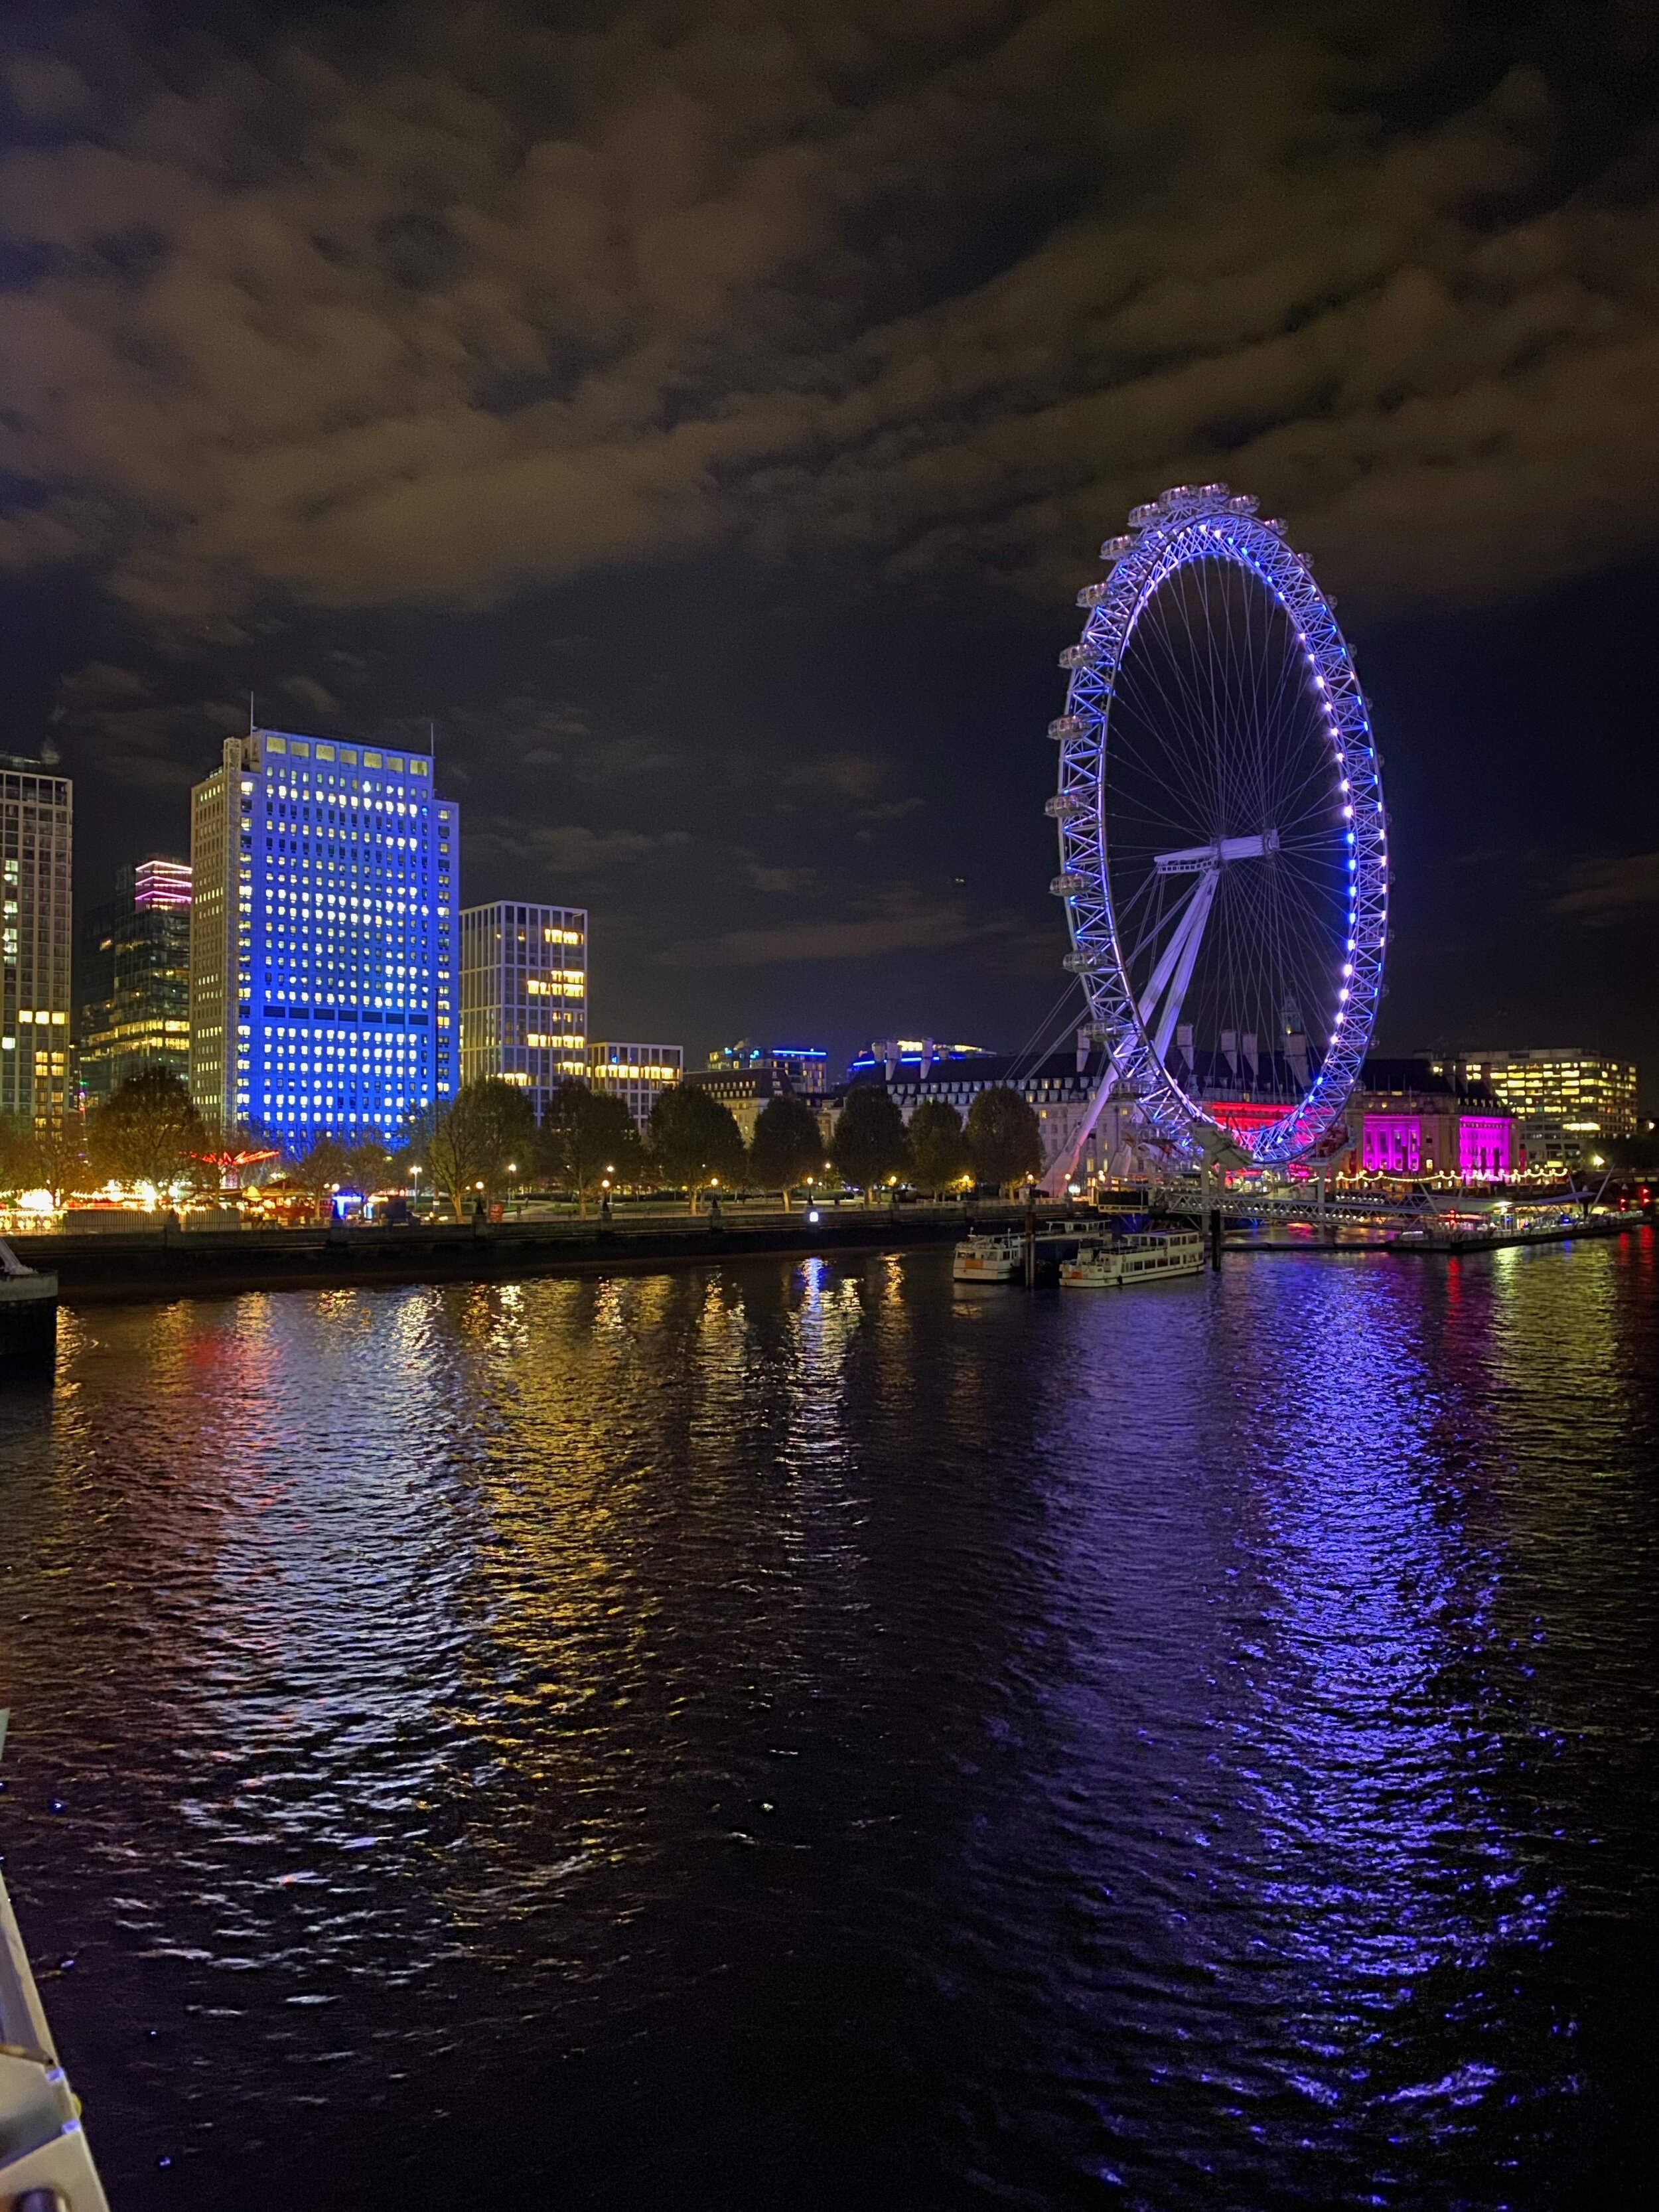 London's river skyline on a dry night!